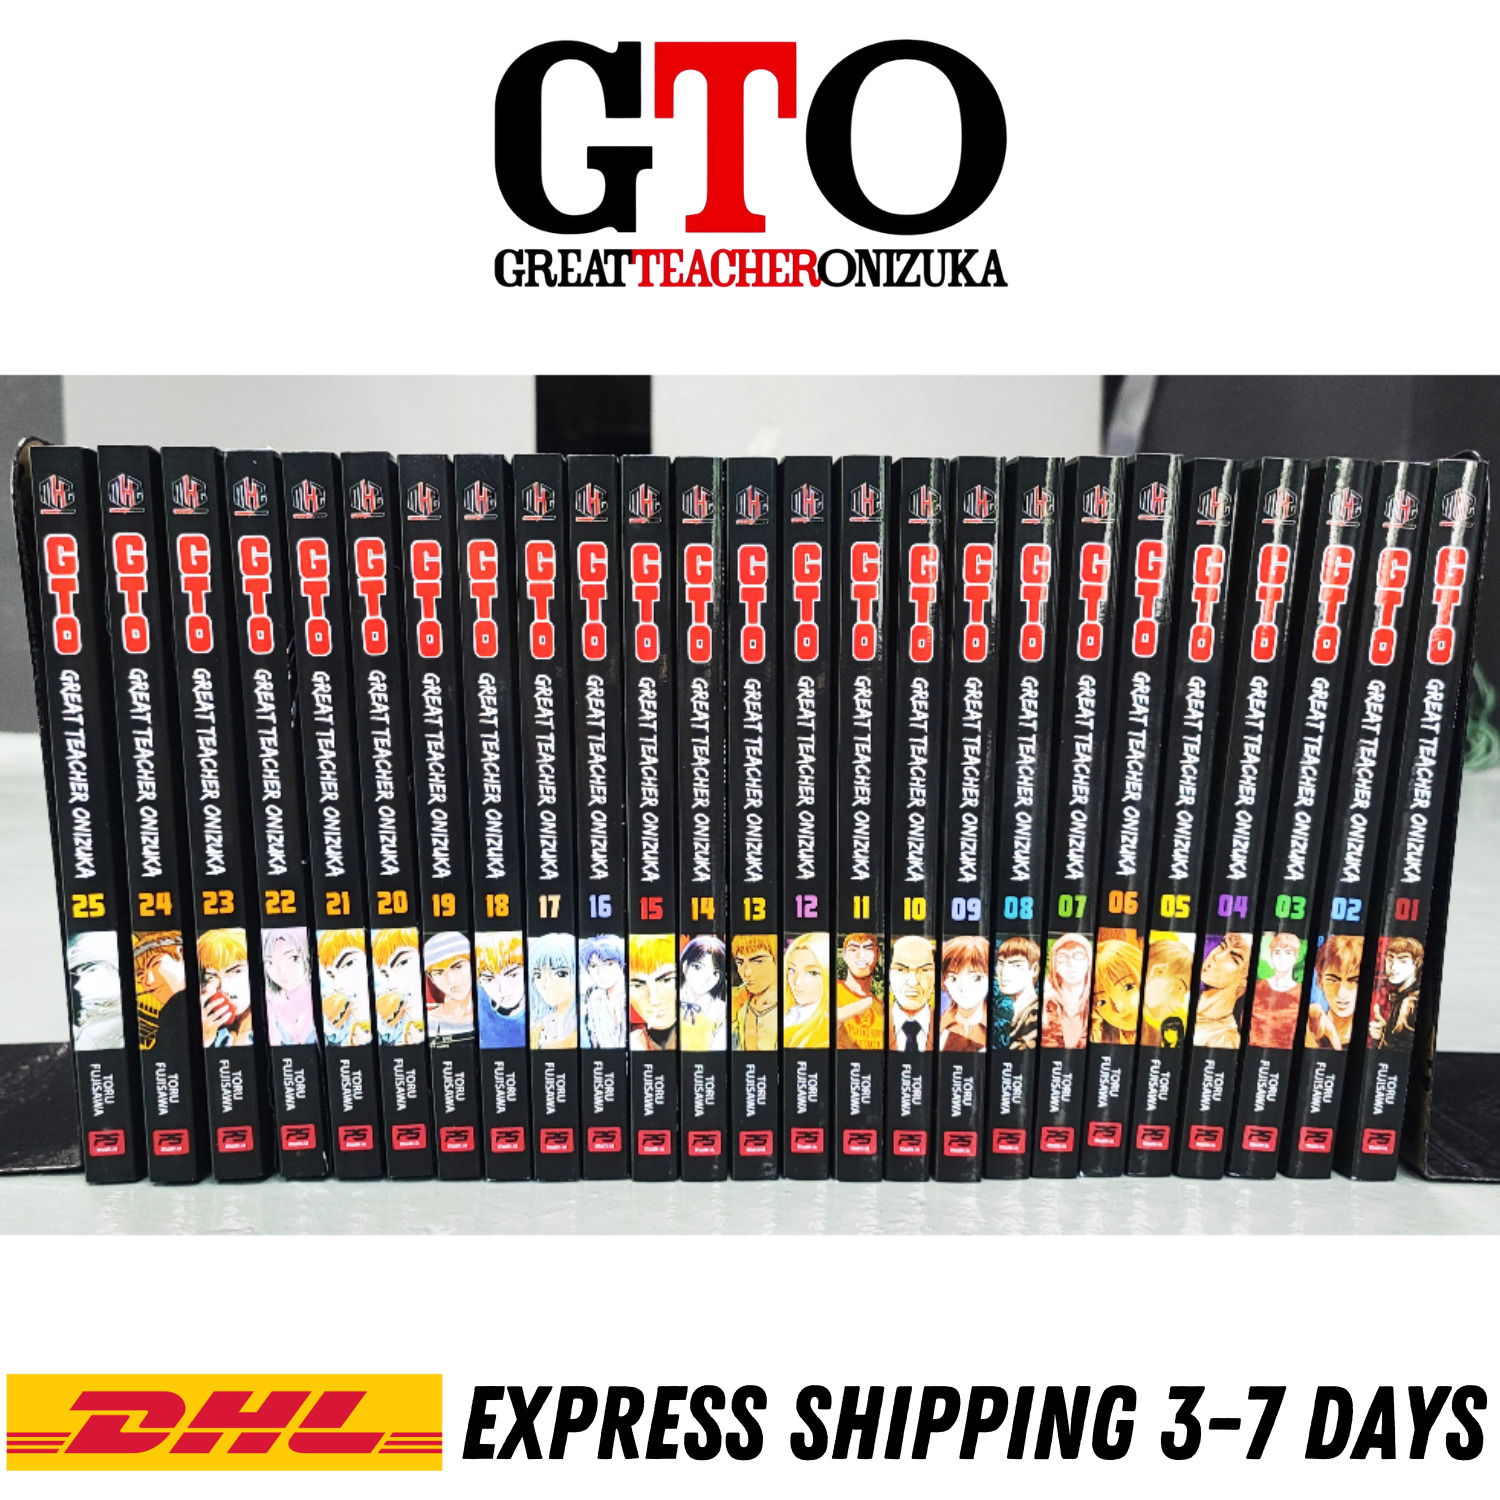 Great Teacher Onizuka GTO Manga Comic (Volume 1-25 End Full Set) English Version